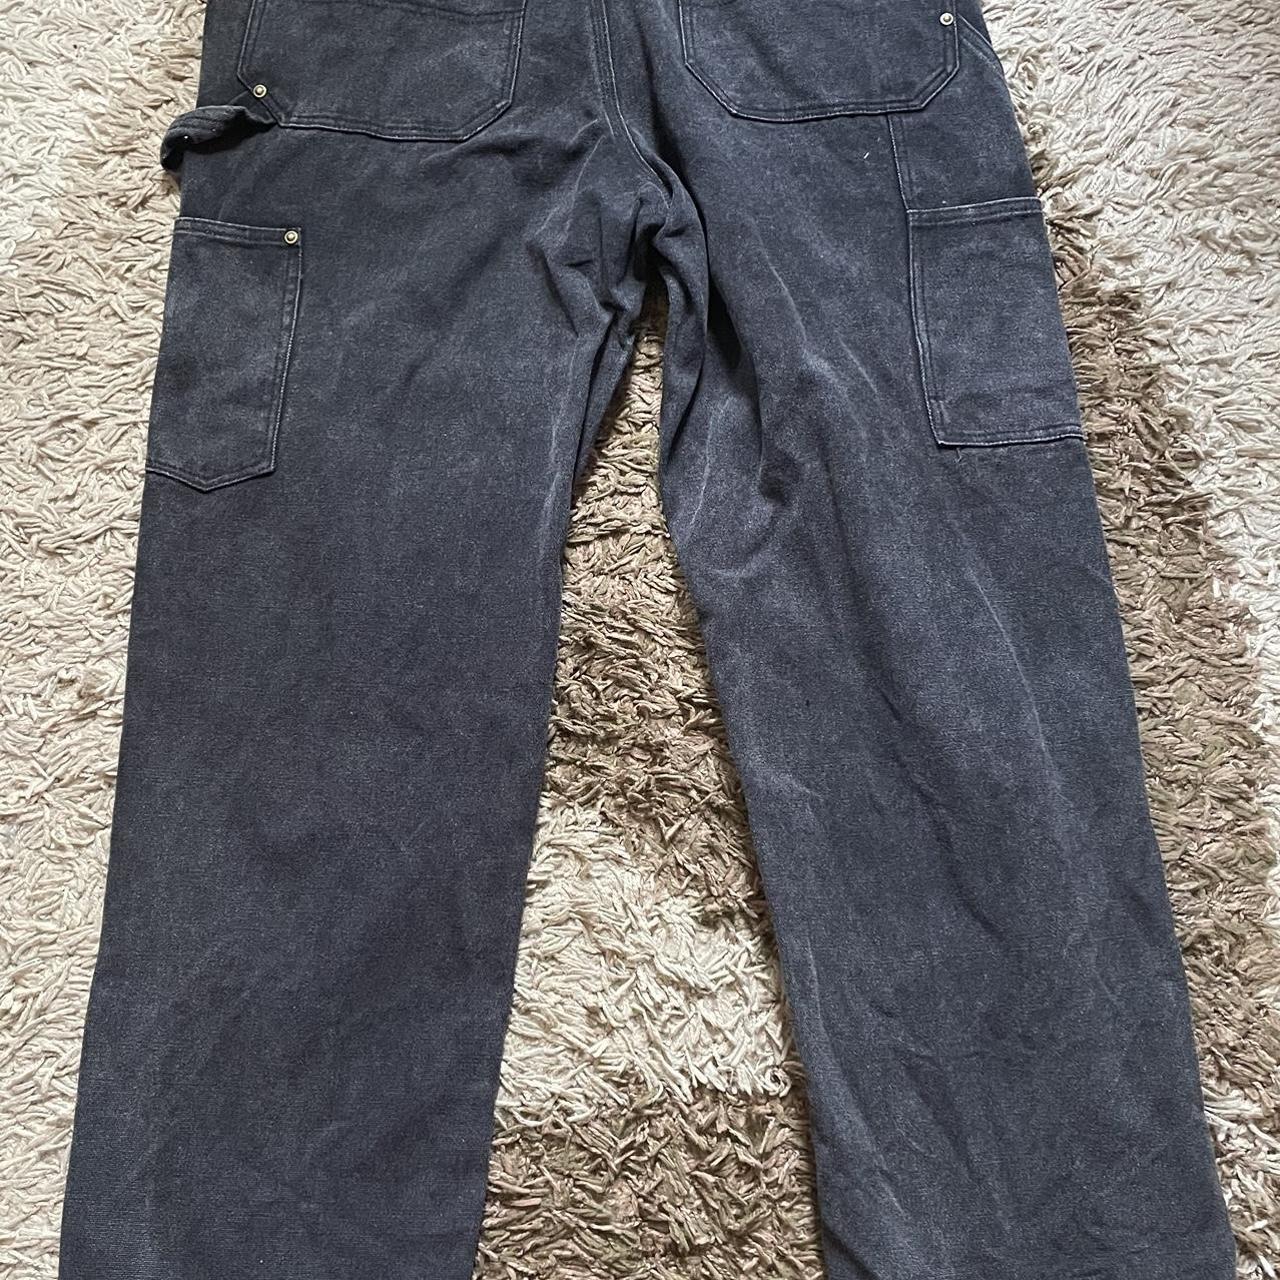 Washed black carhartt carpenter pants 32x30 - Depop